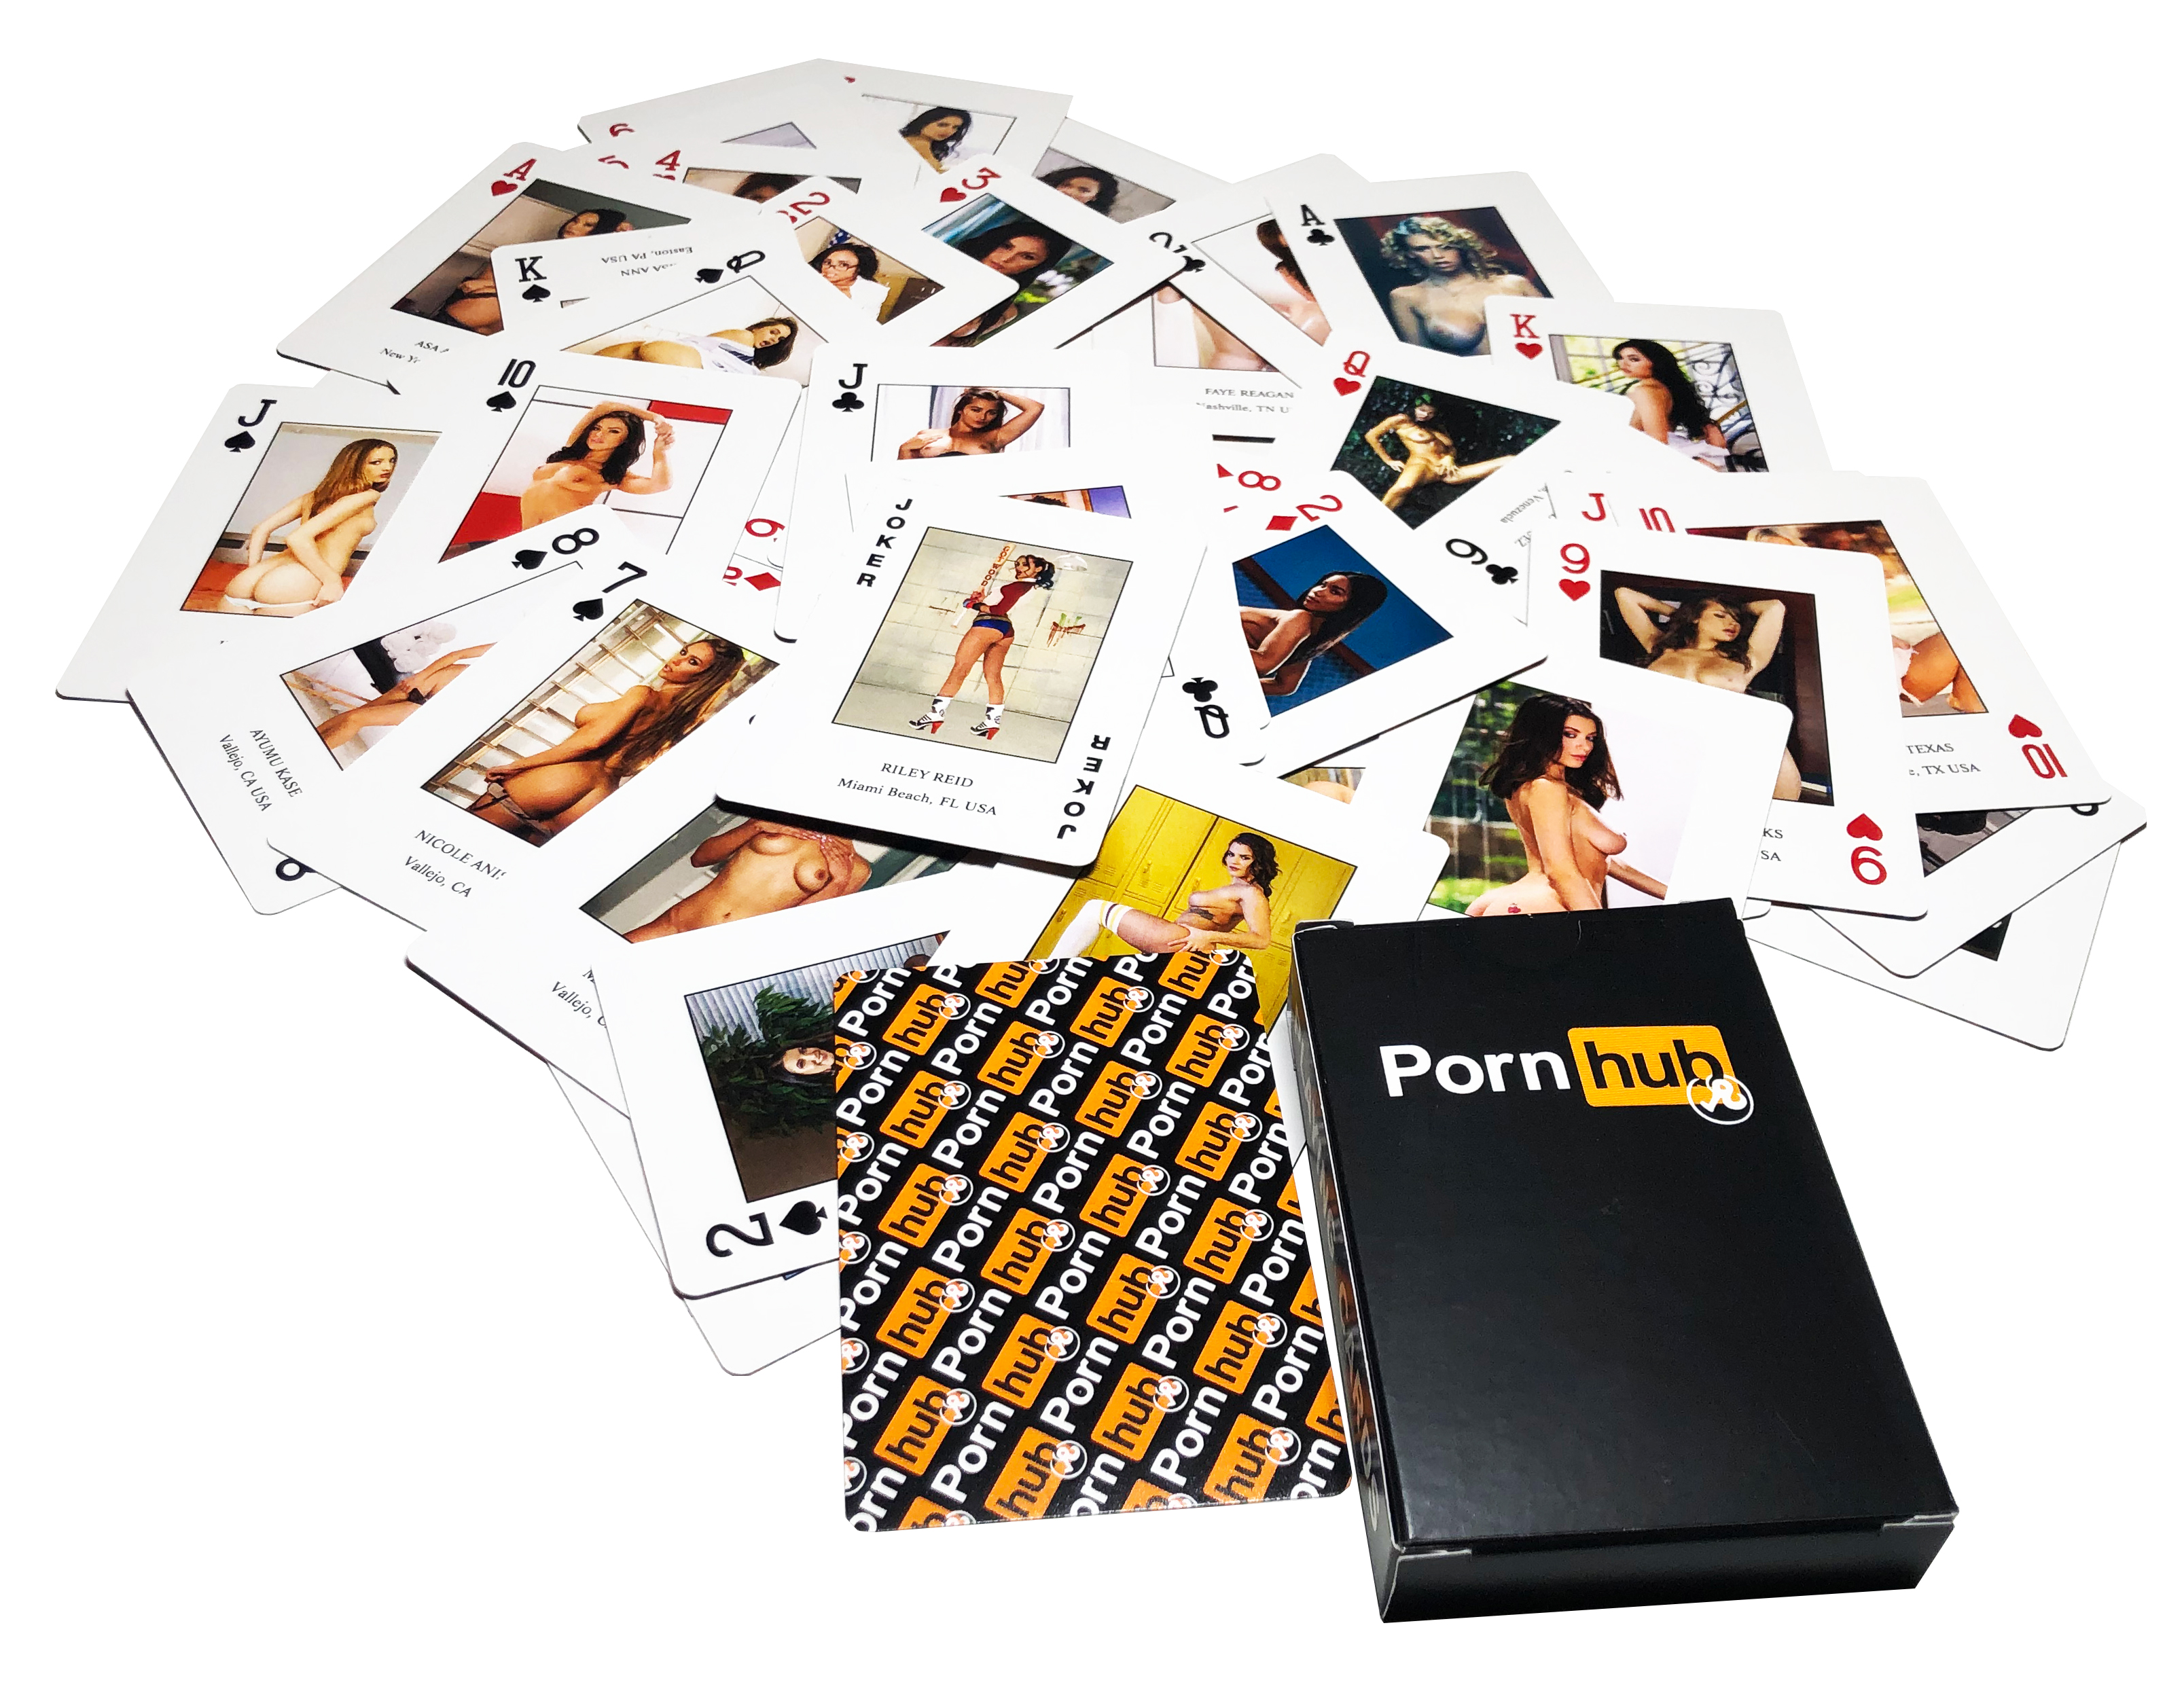 Pornhub playing cards